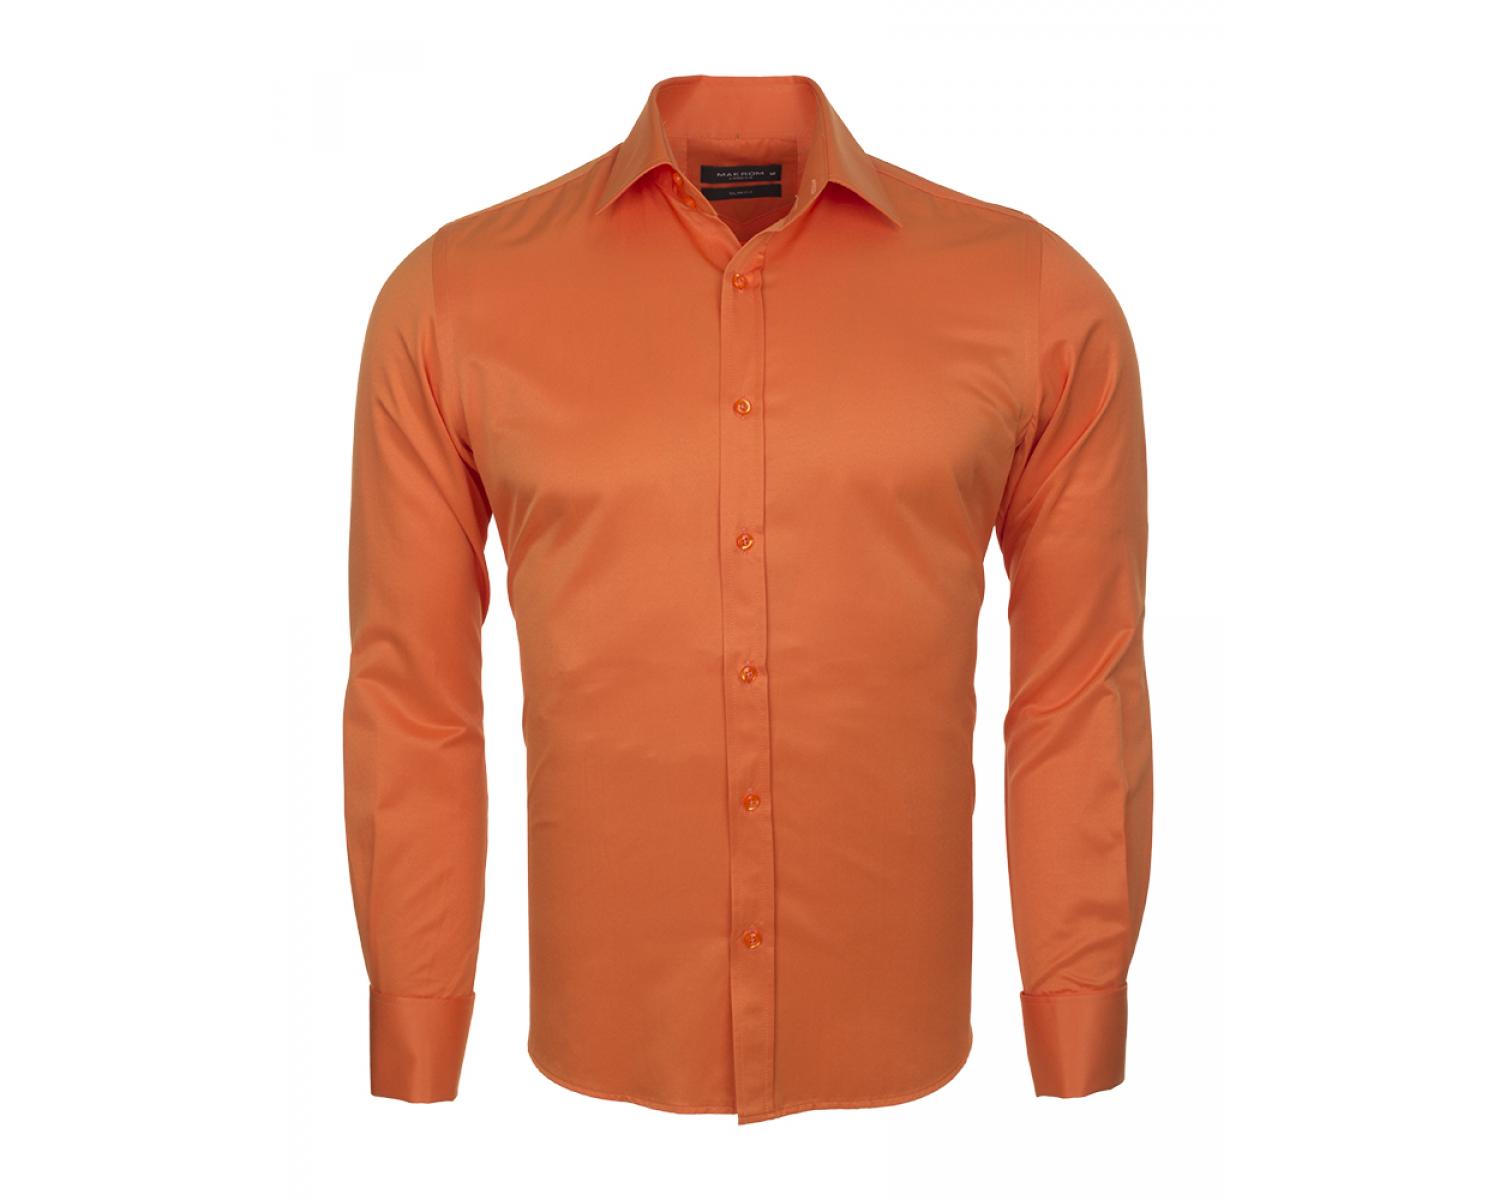 Оранжевая рубашка мужская